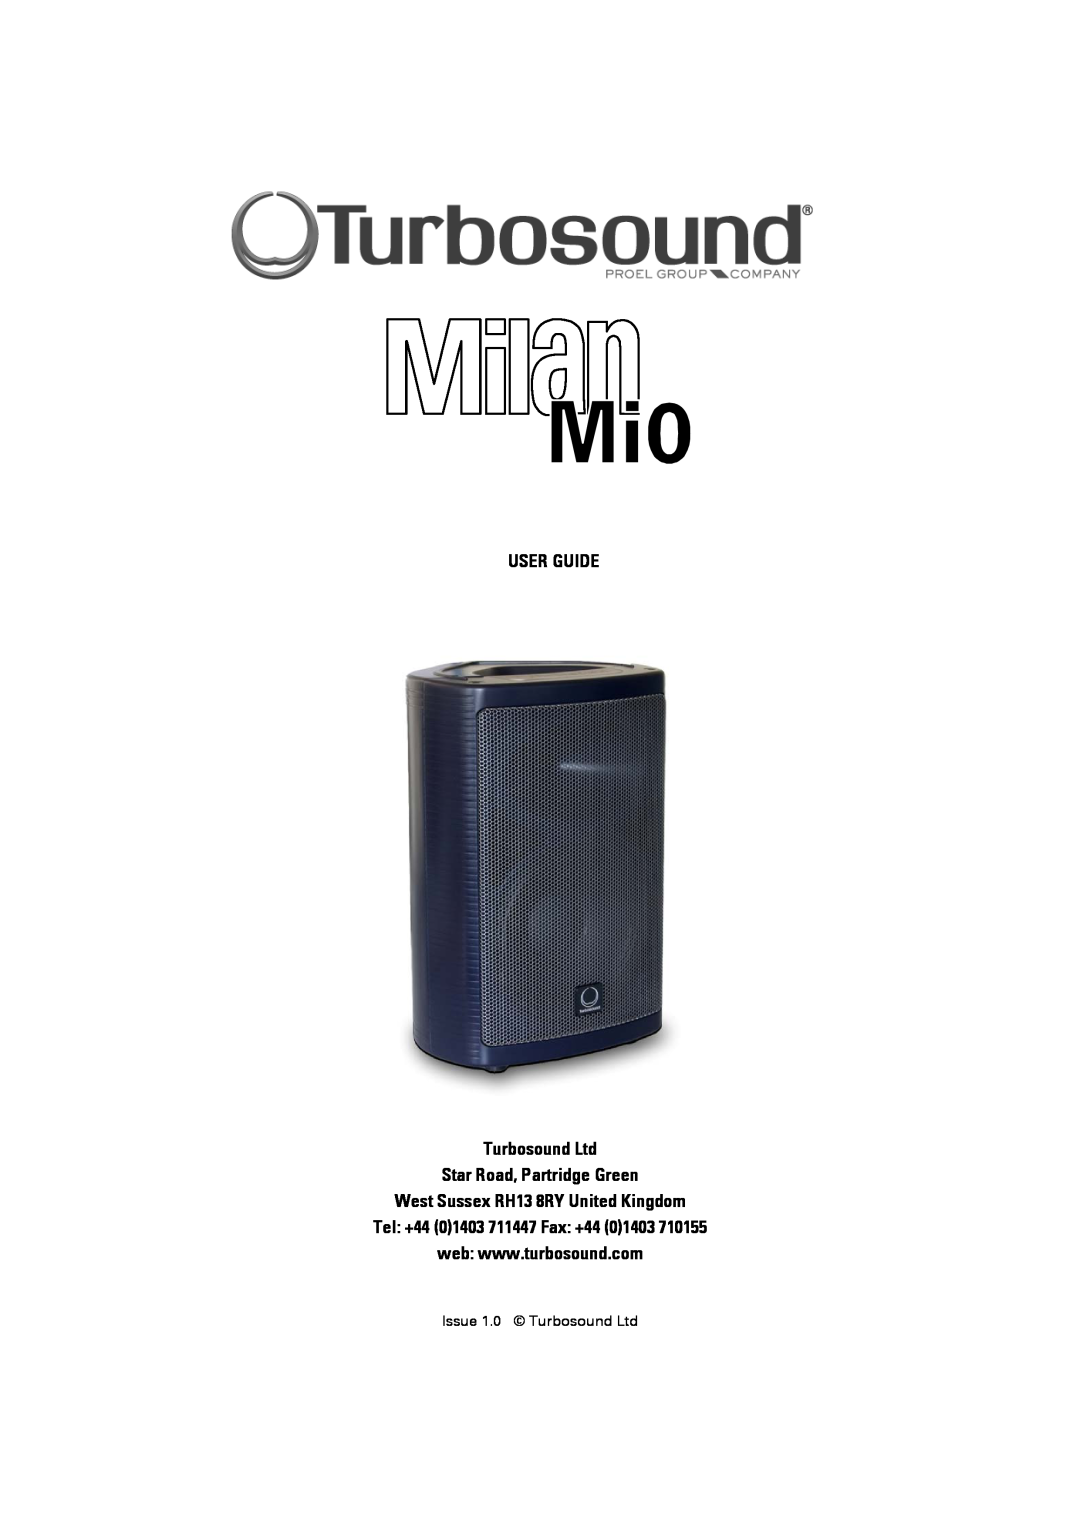 Turbosound Milan Mi0 manual Star Road, Partridge Green, West Sussex RH13 8RY United Kingdom, Tel +44 01403 711447 Fax +44 